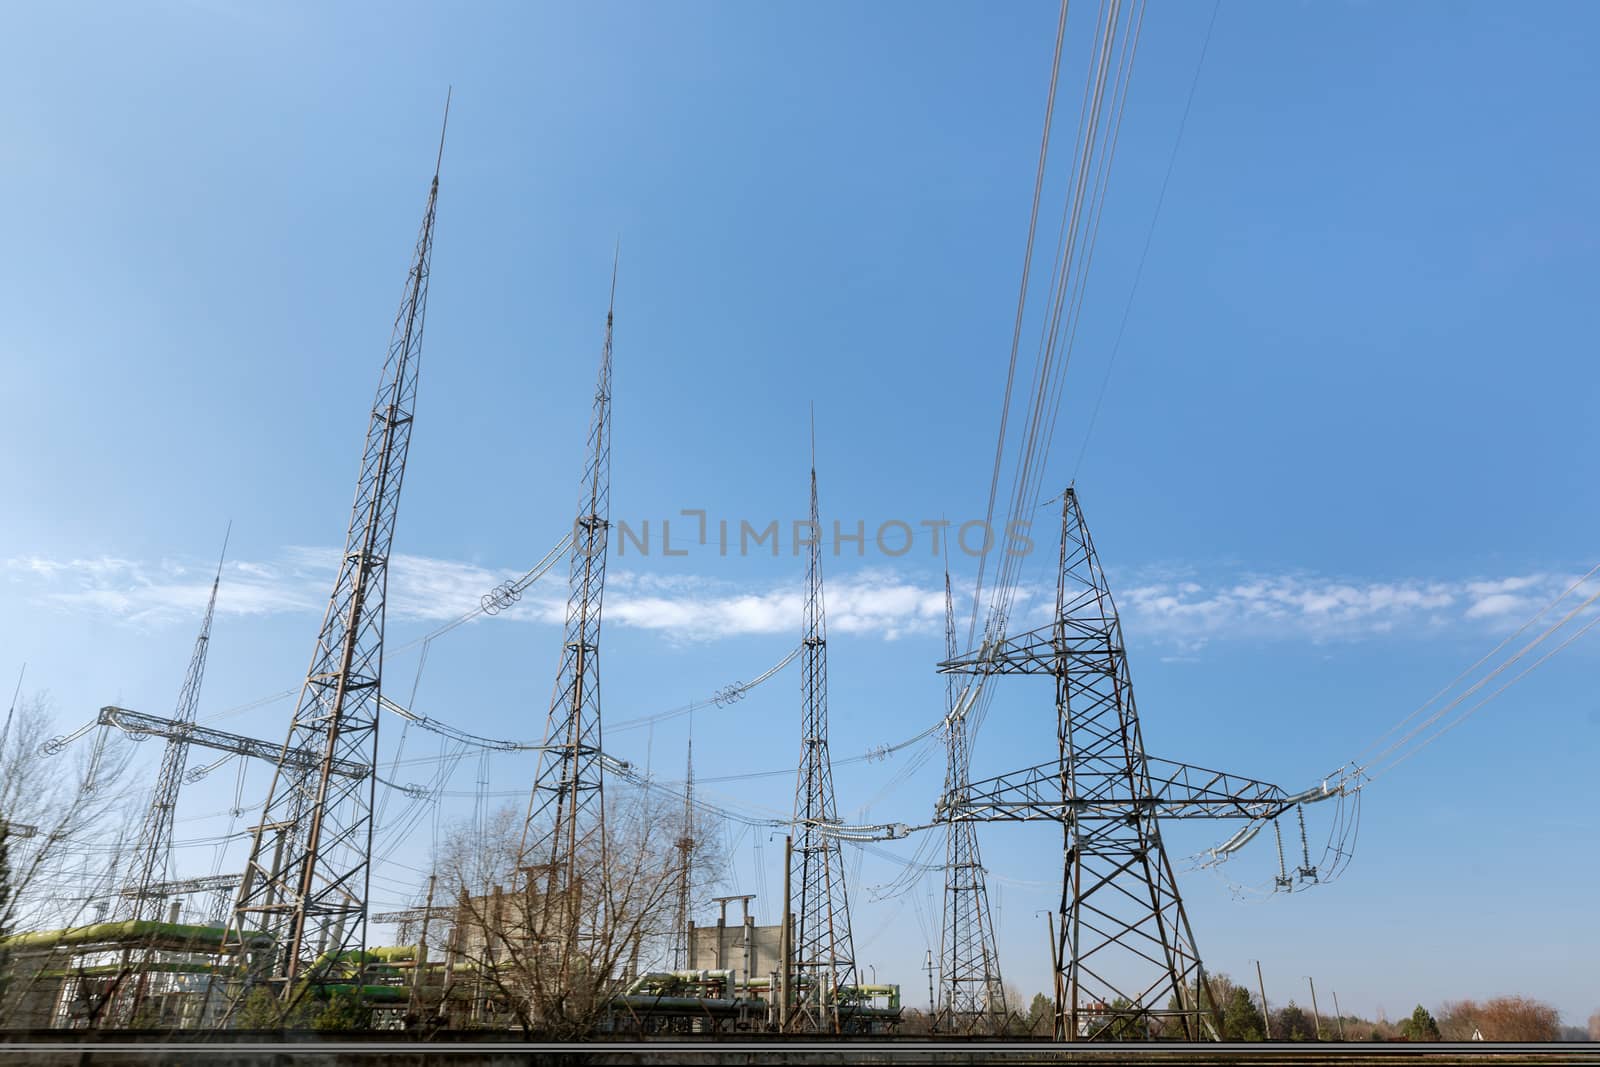 Large pylons at power distributing station under blue sky